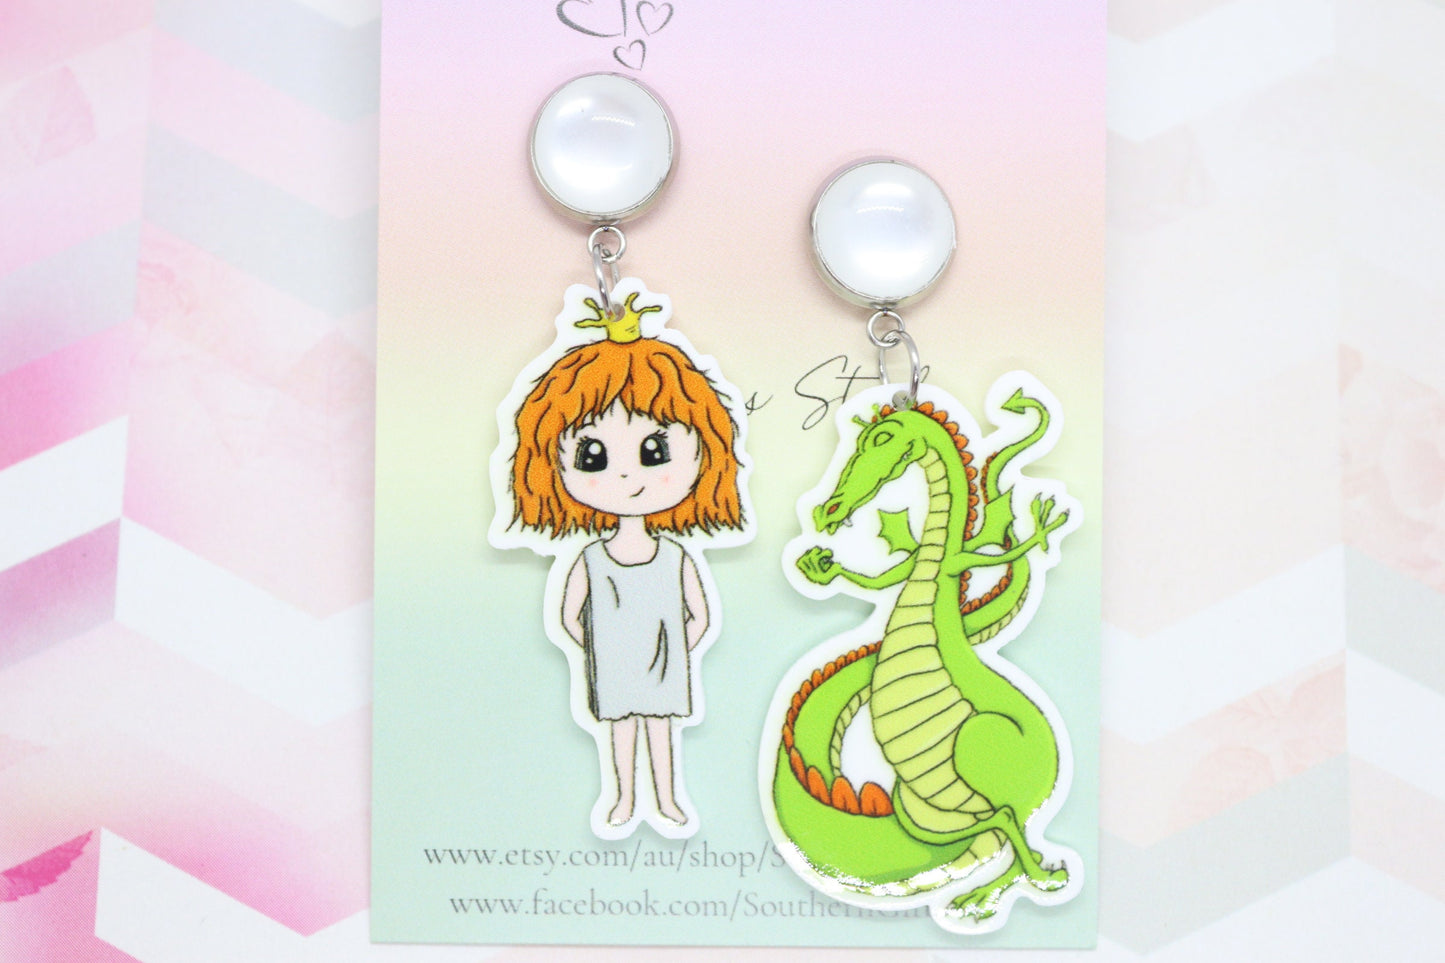 Petite Princess and Dragon Statement Earrings